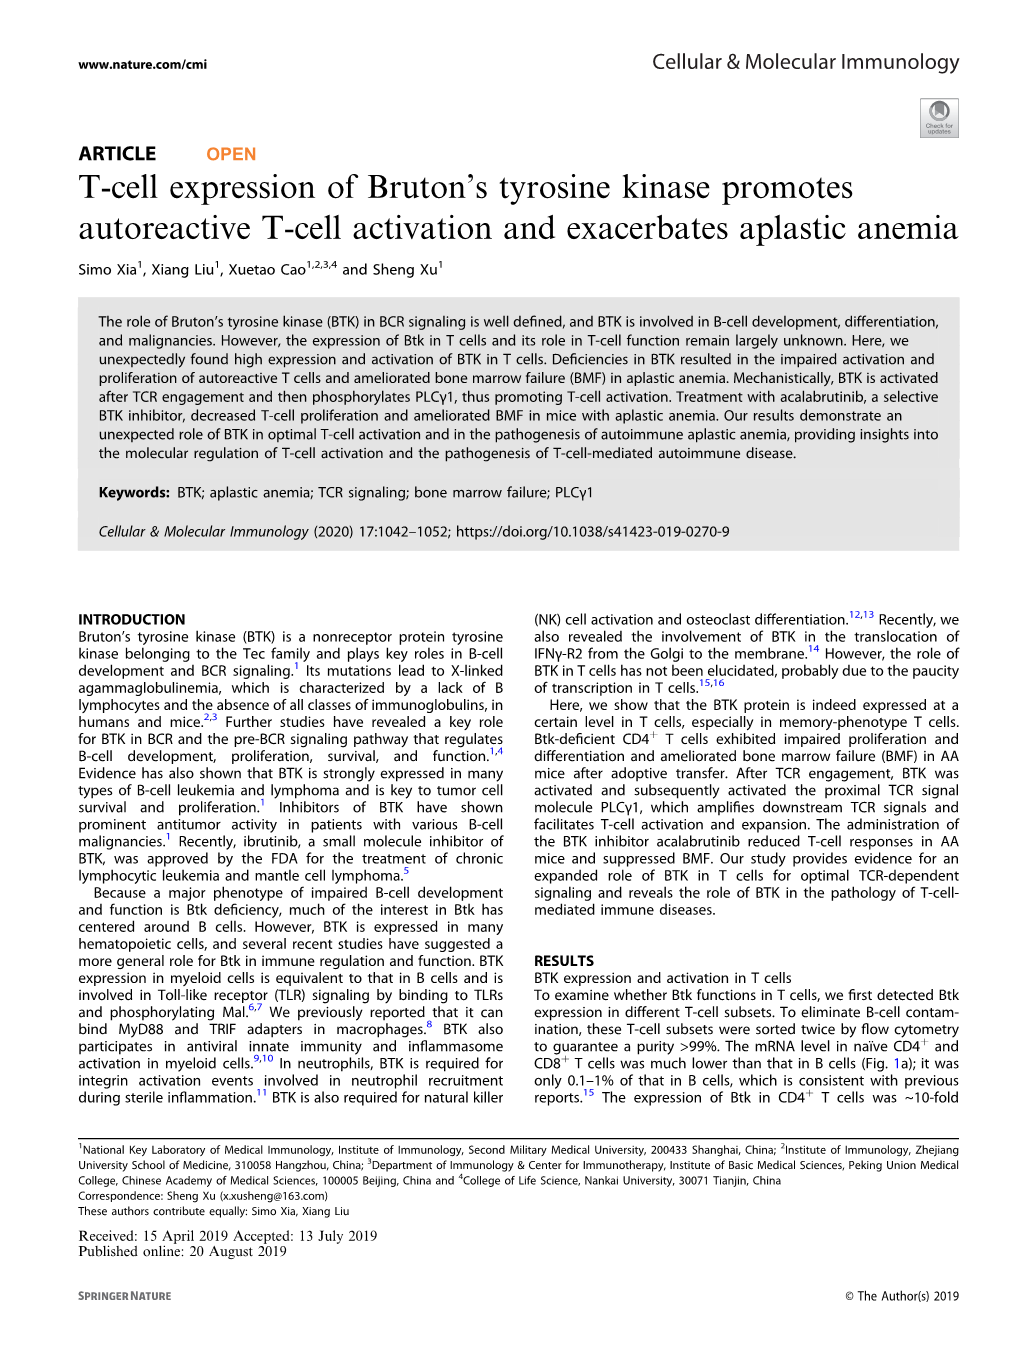 T-Cell Expression of Brutonâ€™S Tyrosine Kinase Promotes